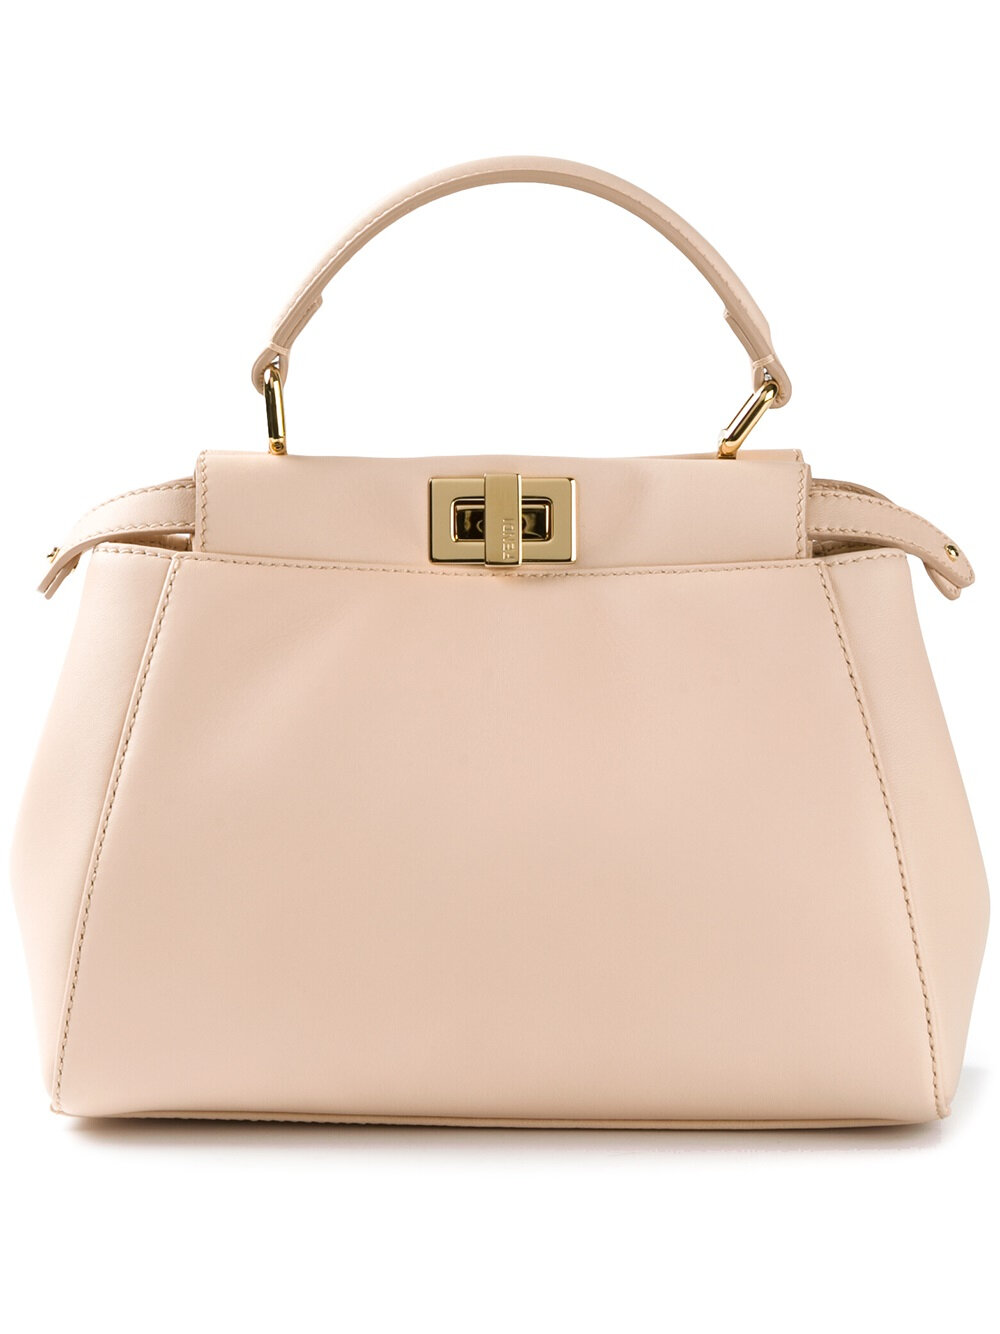 fendi-pink-peekaboo-small-tote-bag-product-1-17334665-0-118994753-normal.jpg